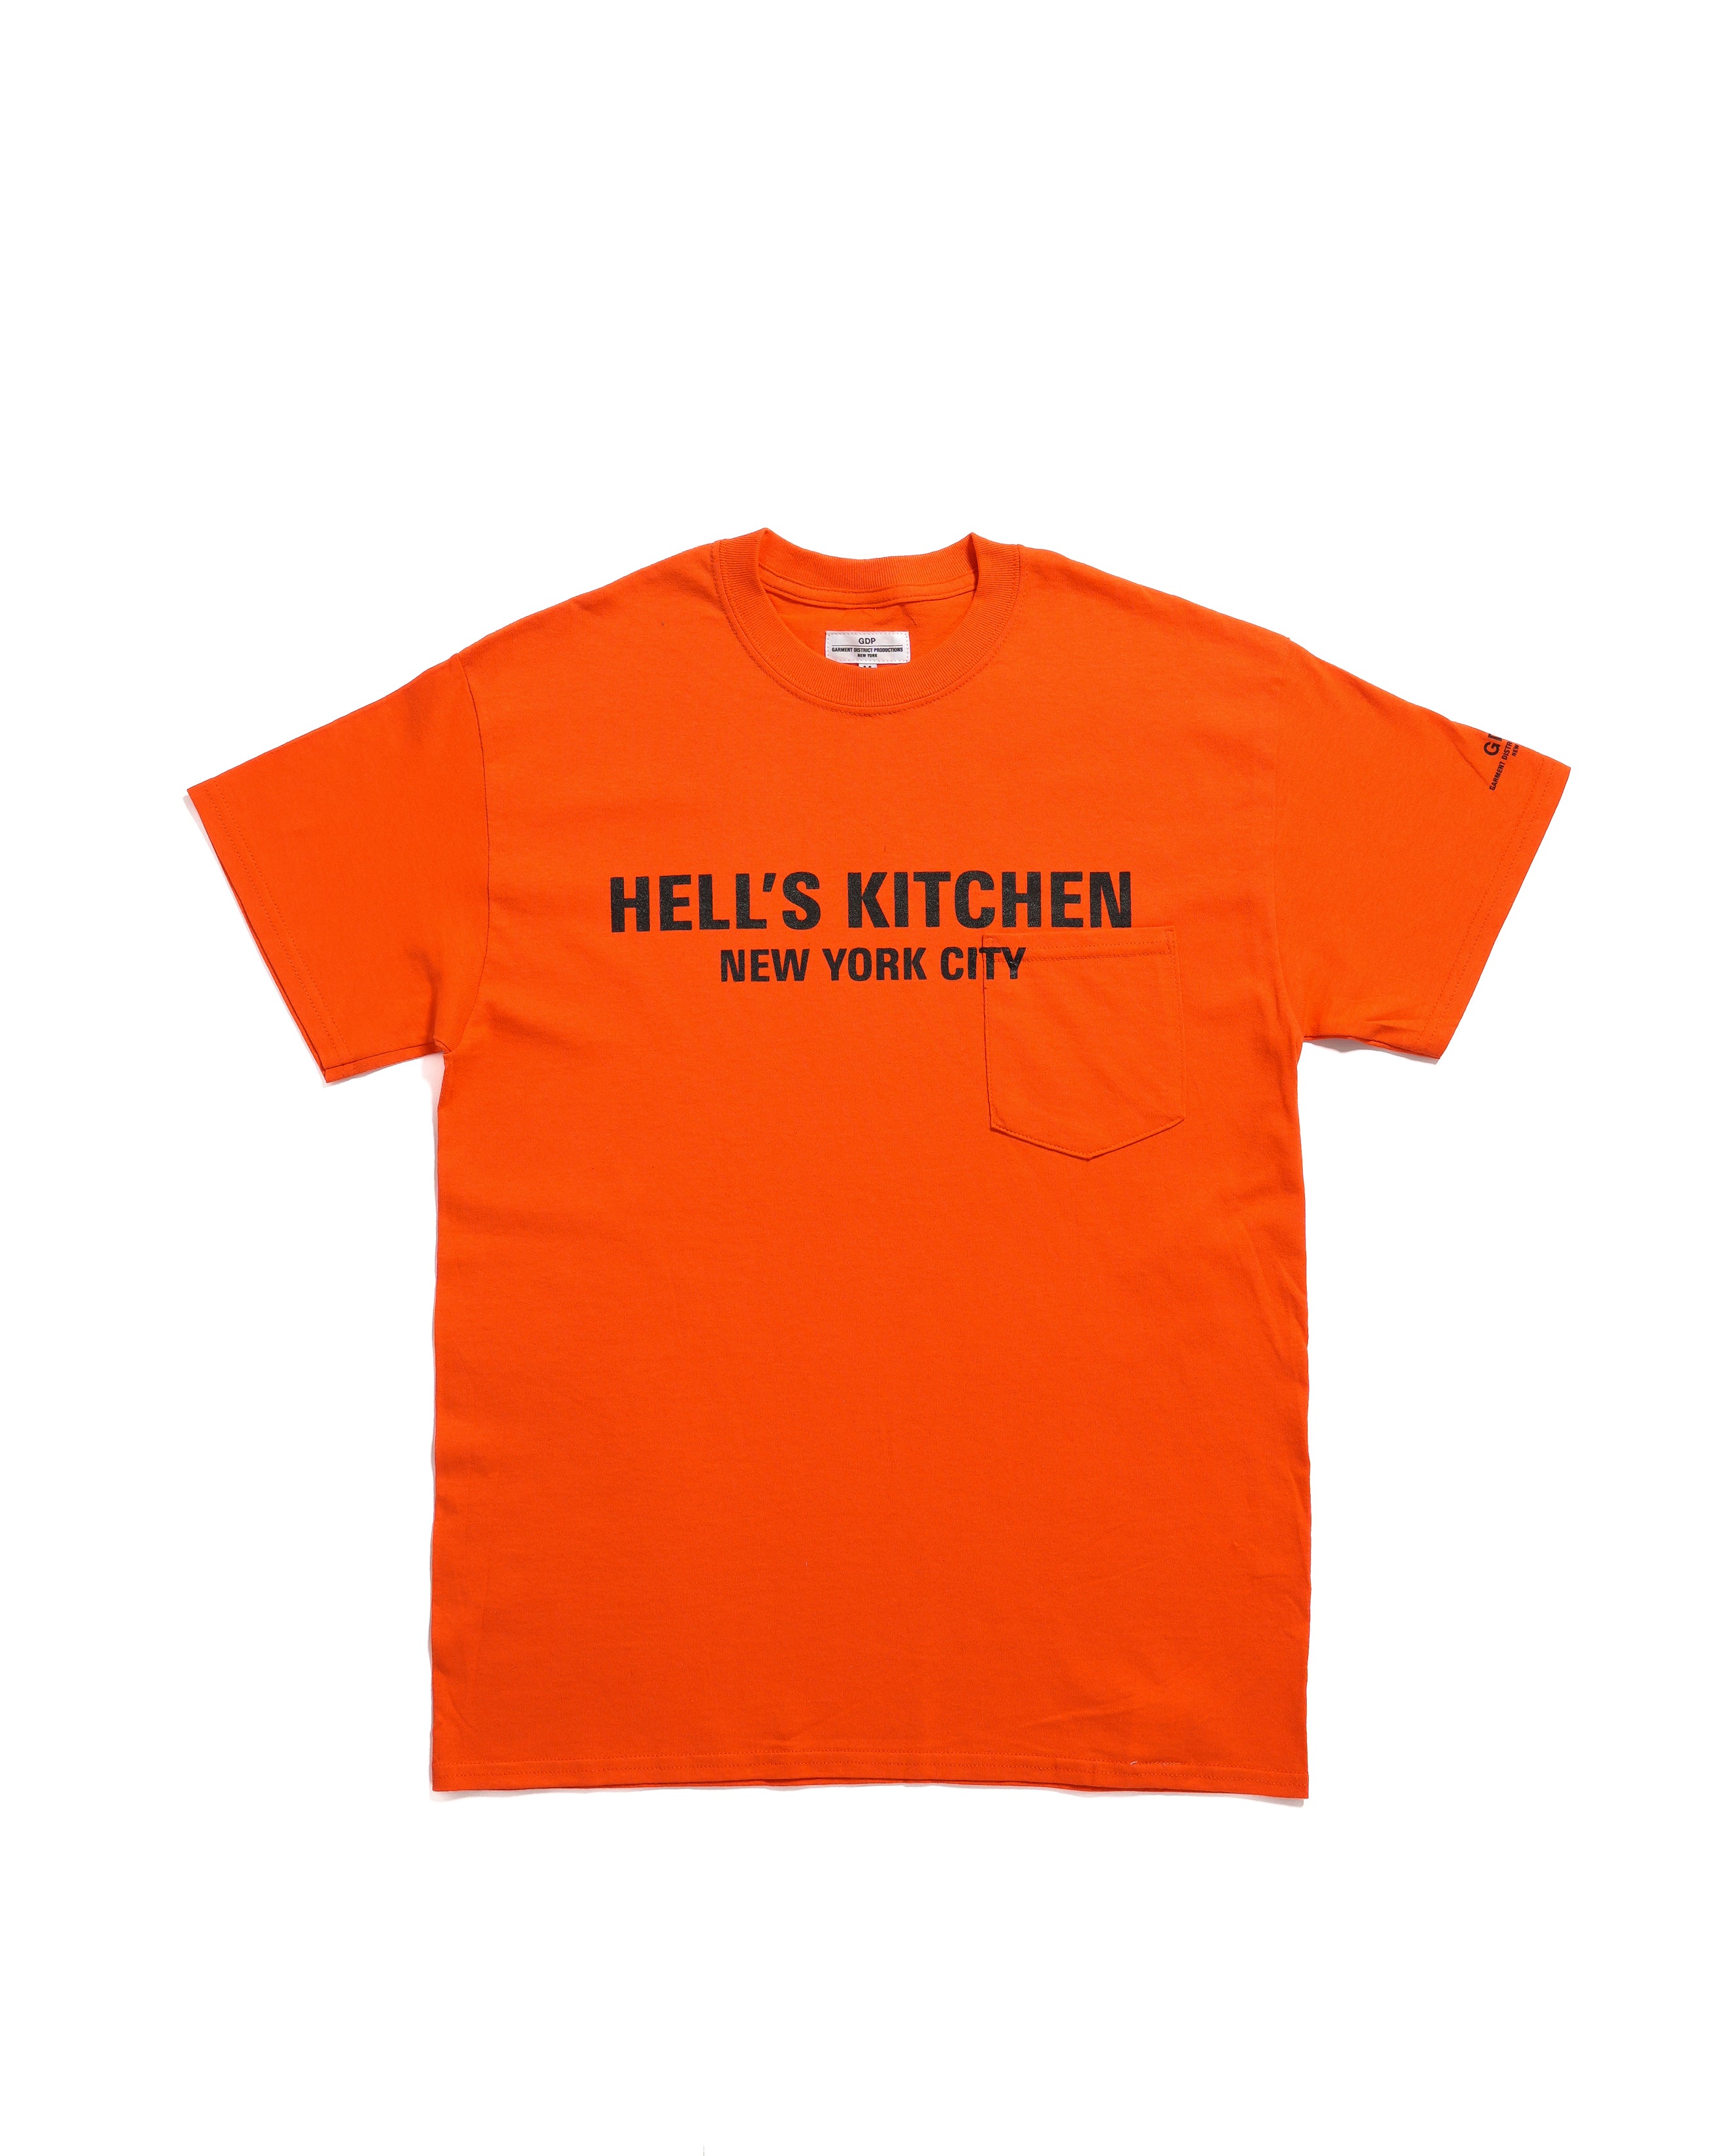 Hell's Kitchen Tee - Orange